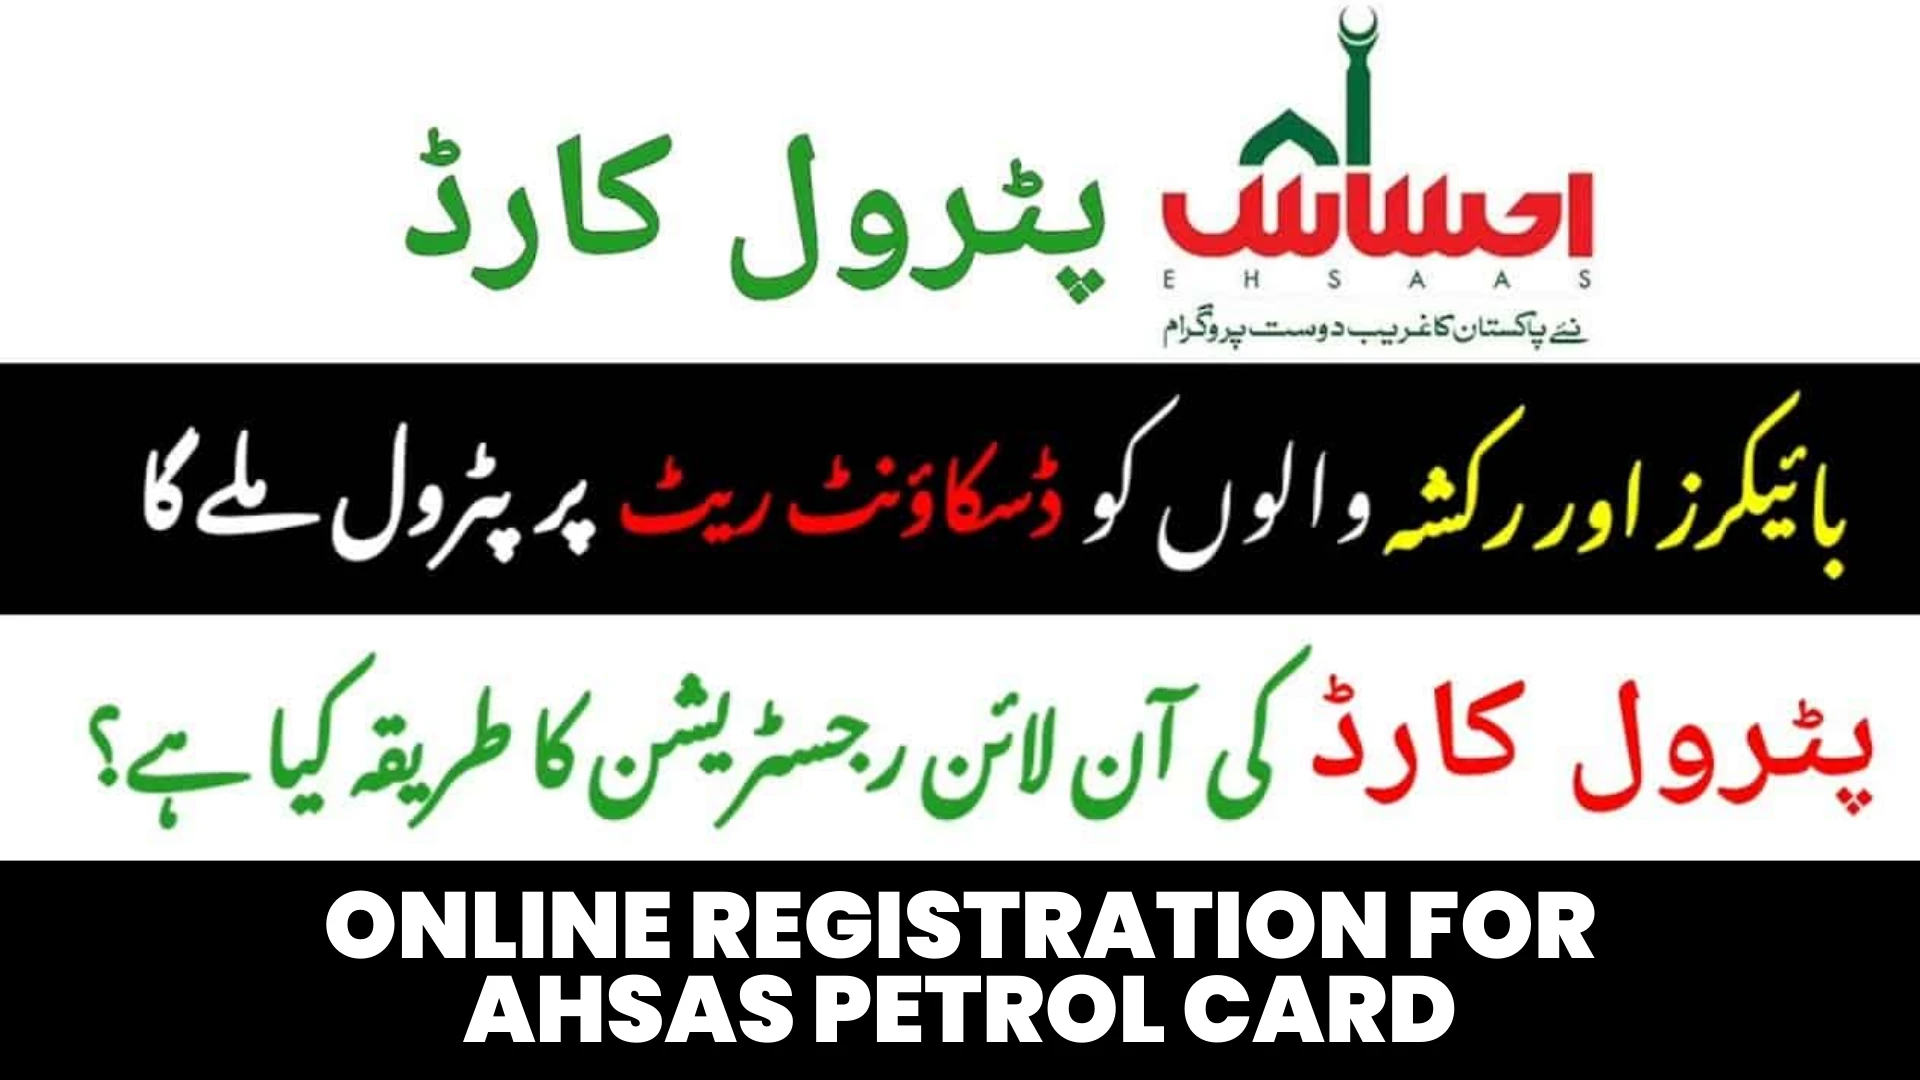 Online Registration for ahsas Petrol Card